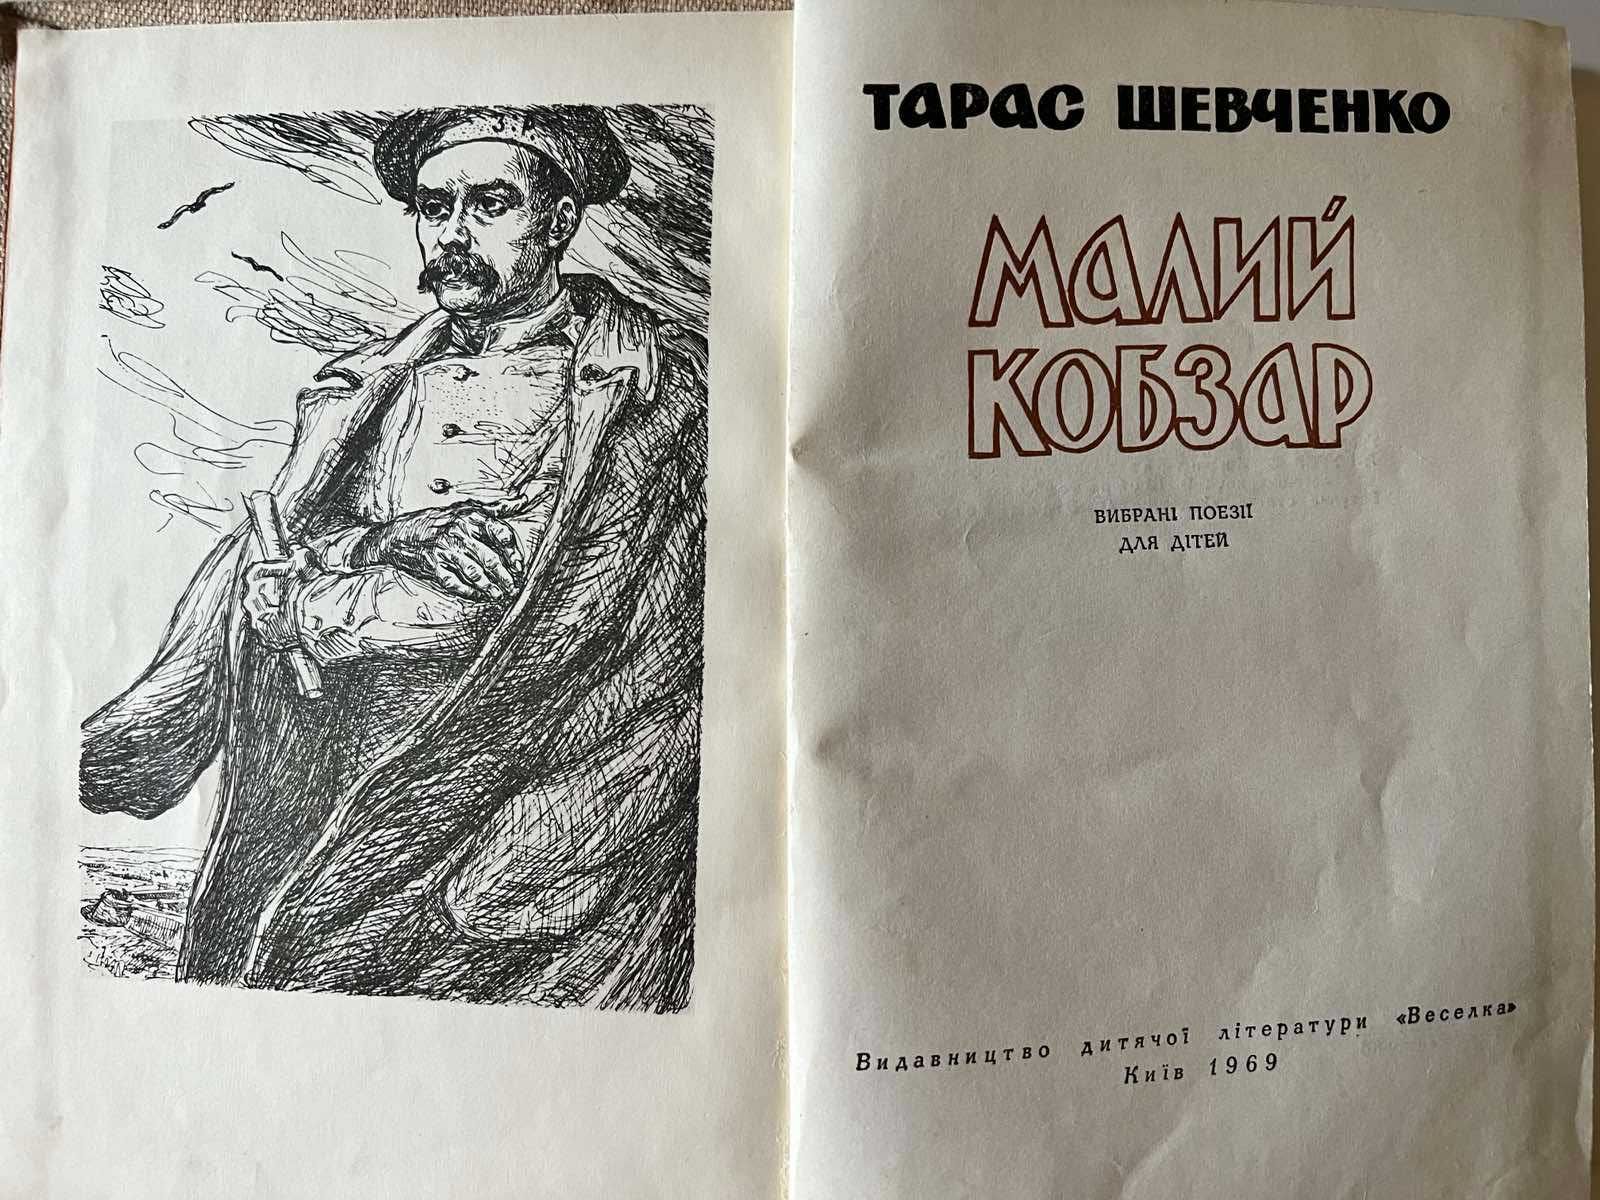 Тарас Шевченко "Малий Кобзар", 1969 г.